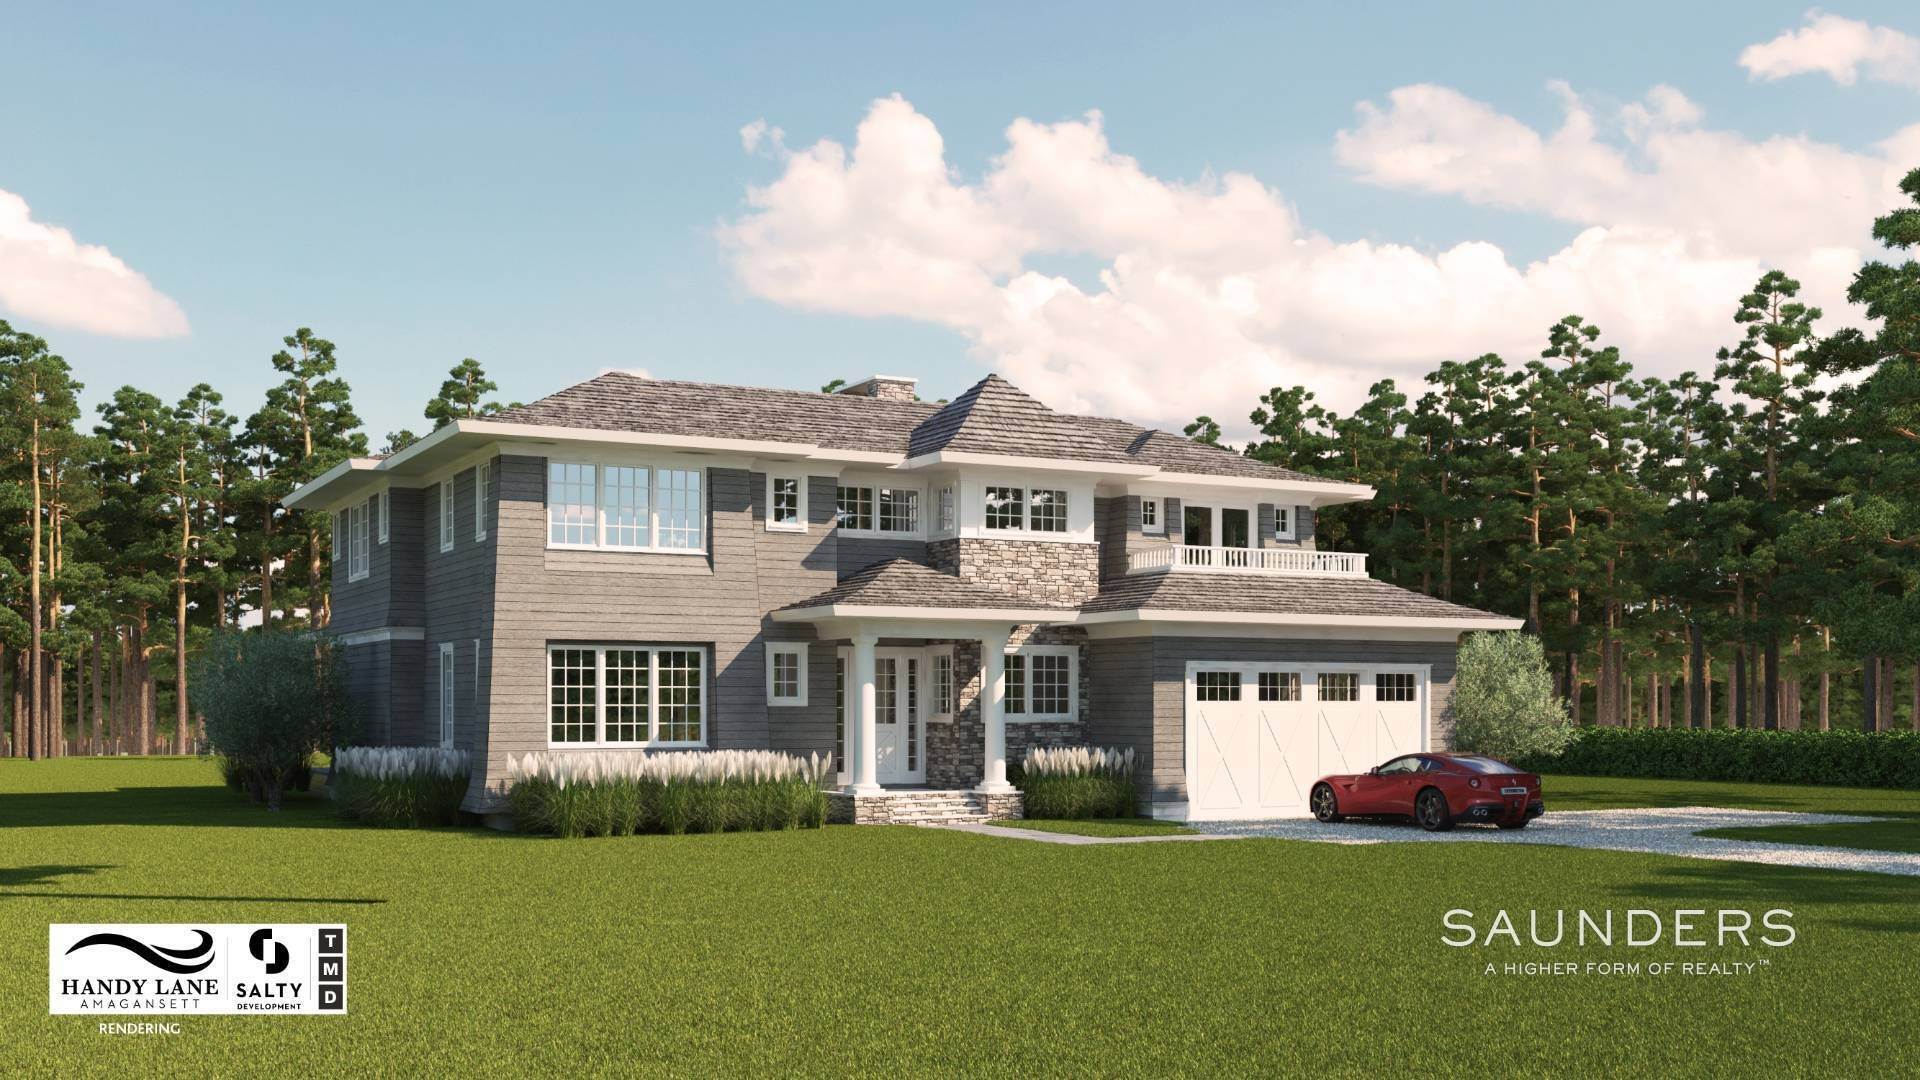 2. Single Family Homes for Sale at Ready For Summer 2022 - New Construction - Amagansett South 30 Handy Lane, Amagansett, NY 11937